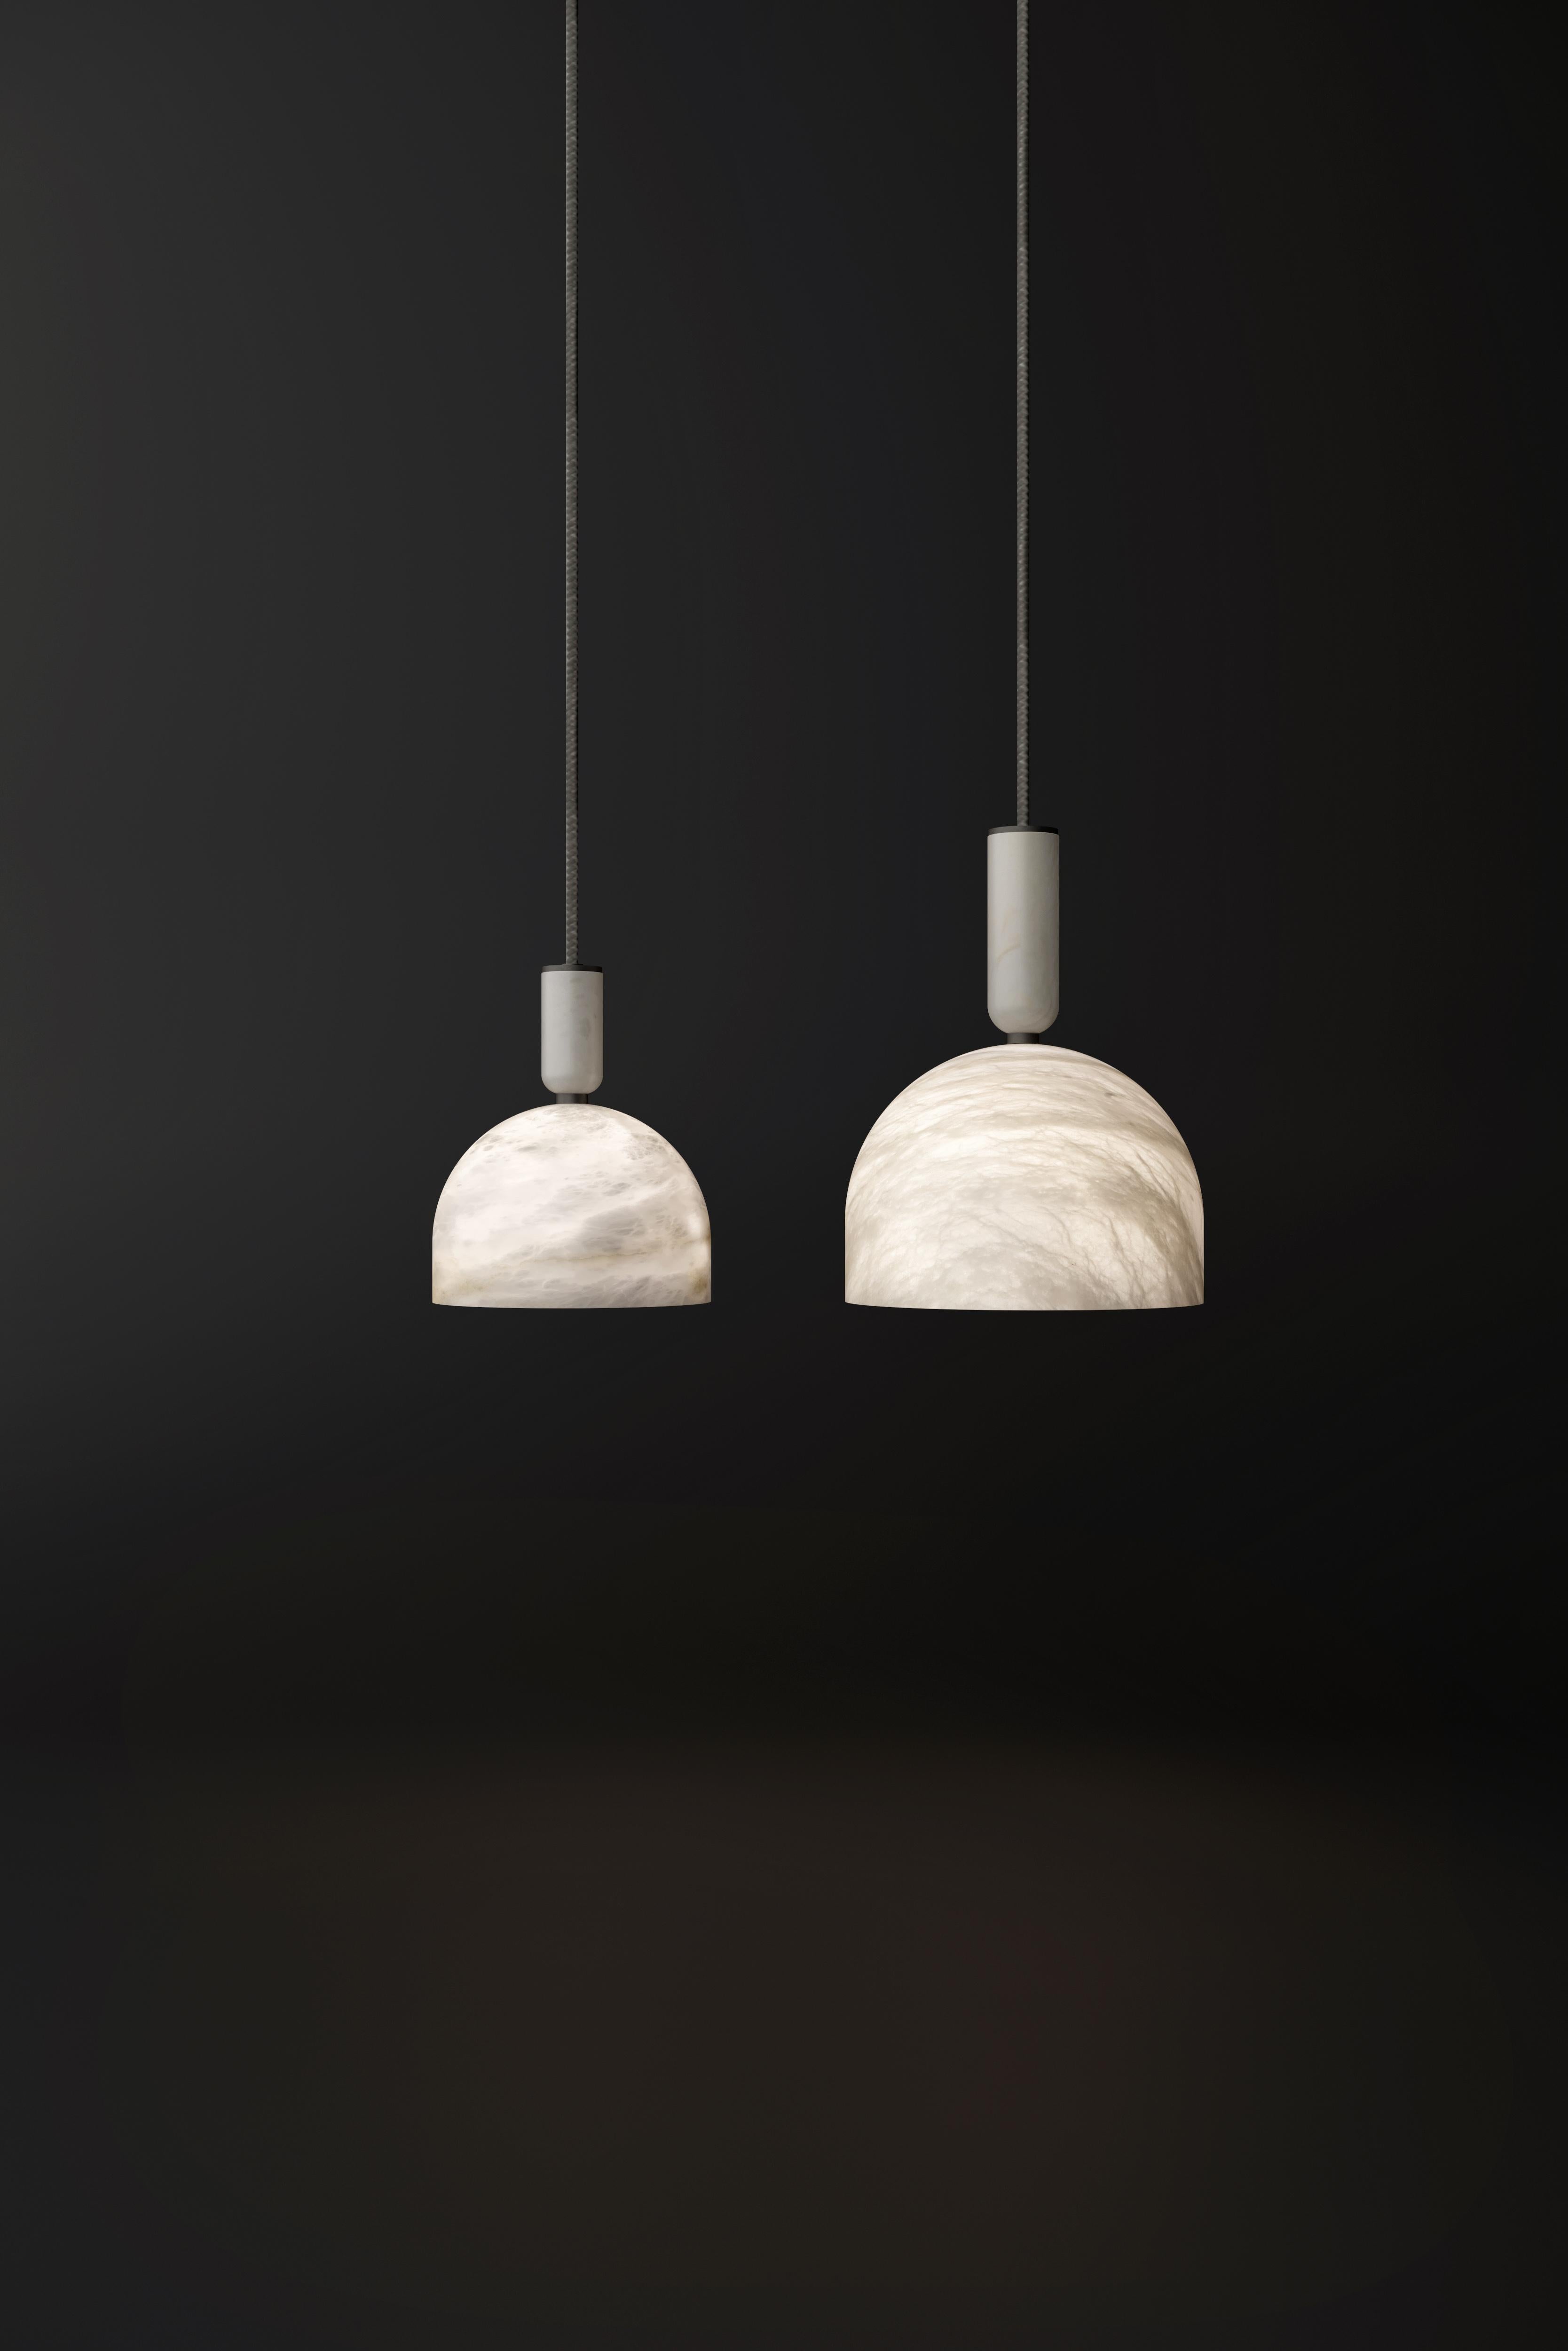 Set of 2 Alabaster Oki pendant light by Atelier Alain Ellouz
Collection Edition
Atelier Arnaud Sabatier
Dimensions: Ø 5.5